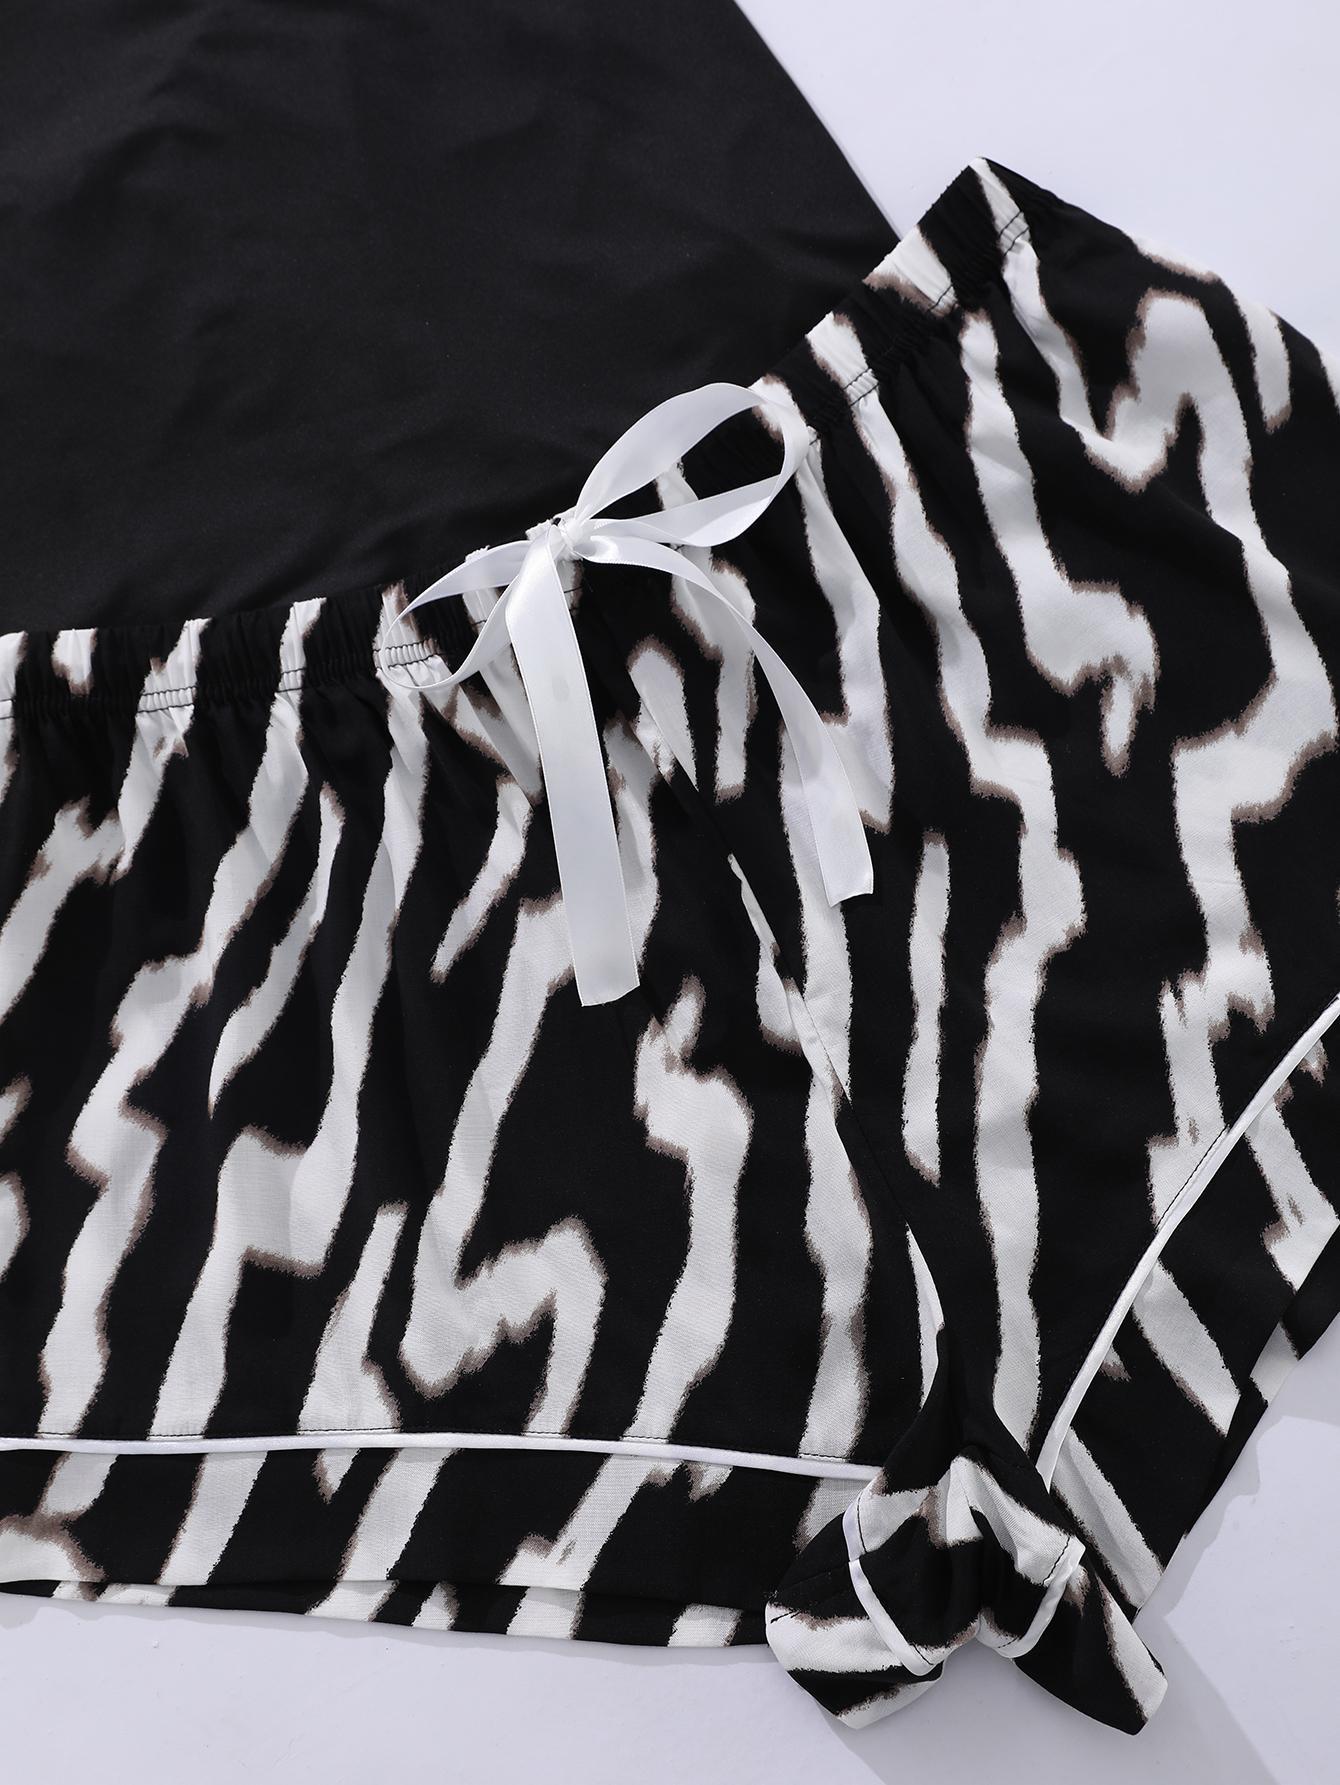 Black Plus Size Lace Trim Scoop Neck Cami and Printed Shorts Pajama Set Plus Size Clothes